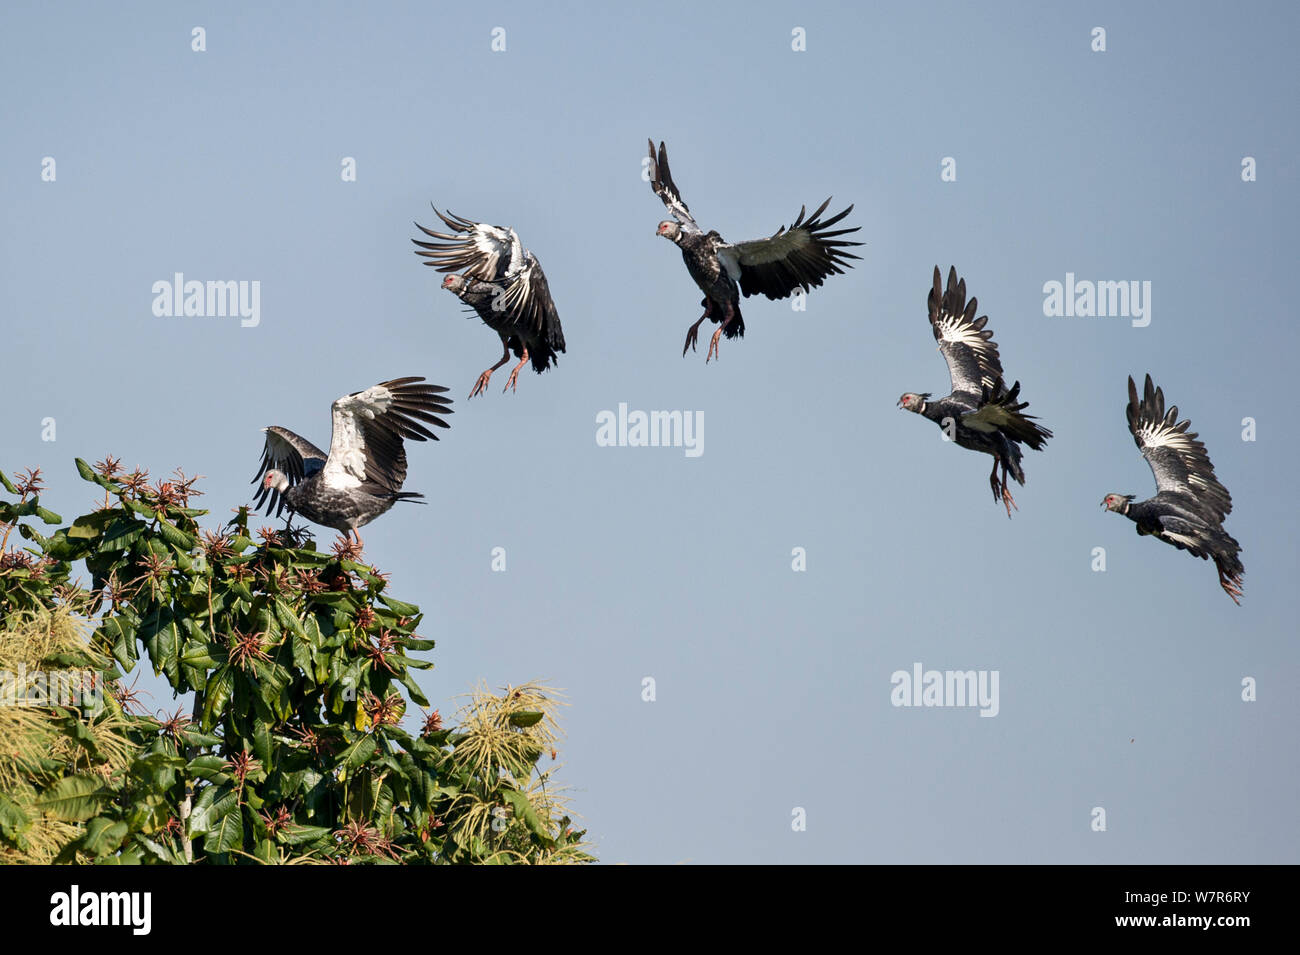 Südliche Screamer oder Crested Screamer (Chauna torquata) im Flug und Landung auf dem Fluss - Seite Baum. Taiama Ecological Reserve, Paraguay River, Western Pantanal, Brasilien. Digital Composite Stockfoto